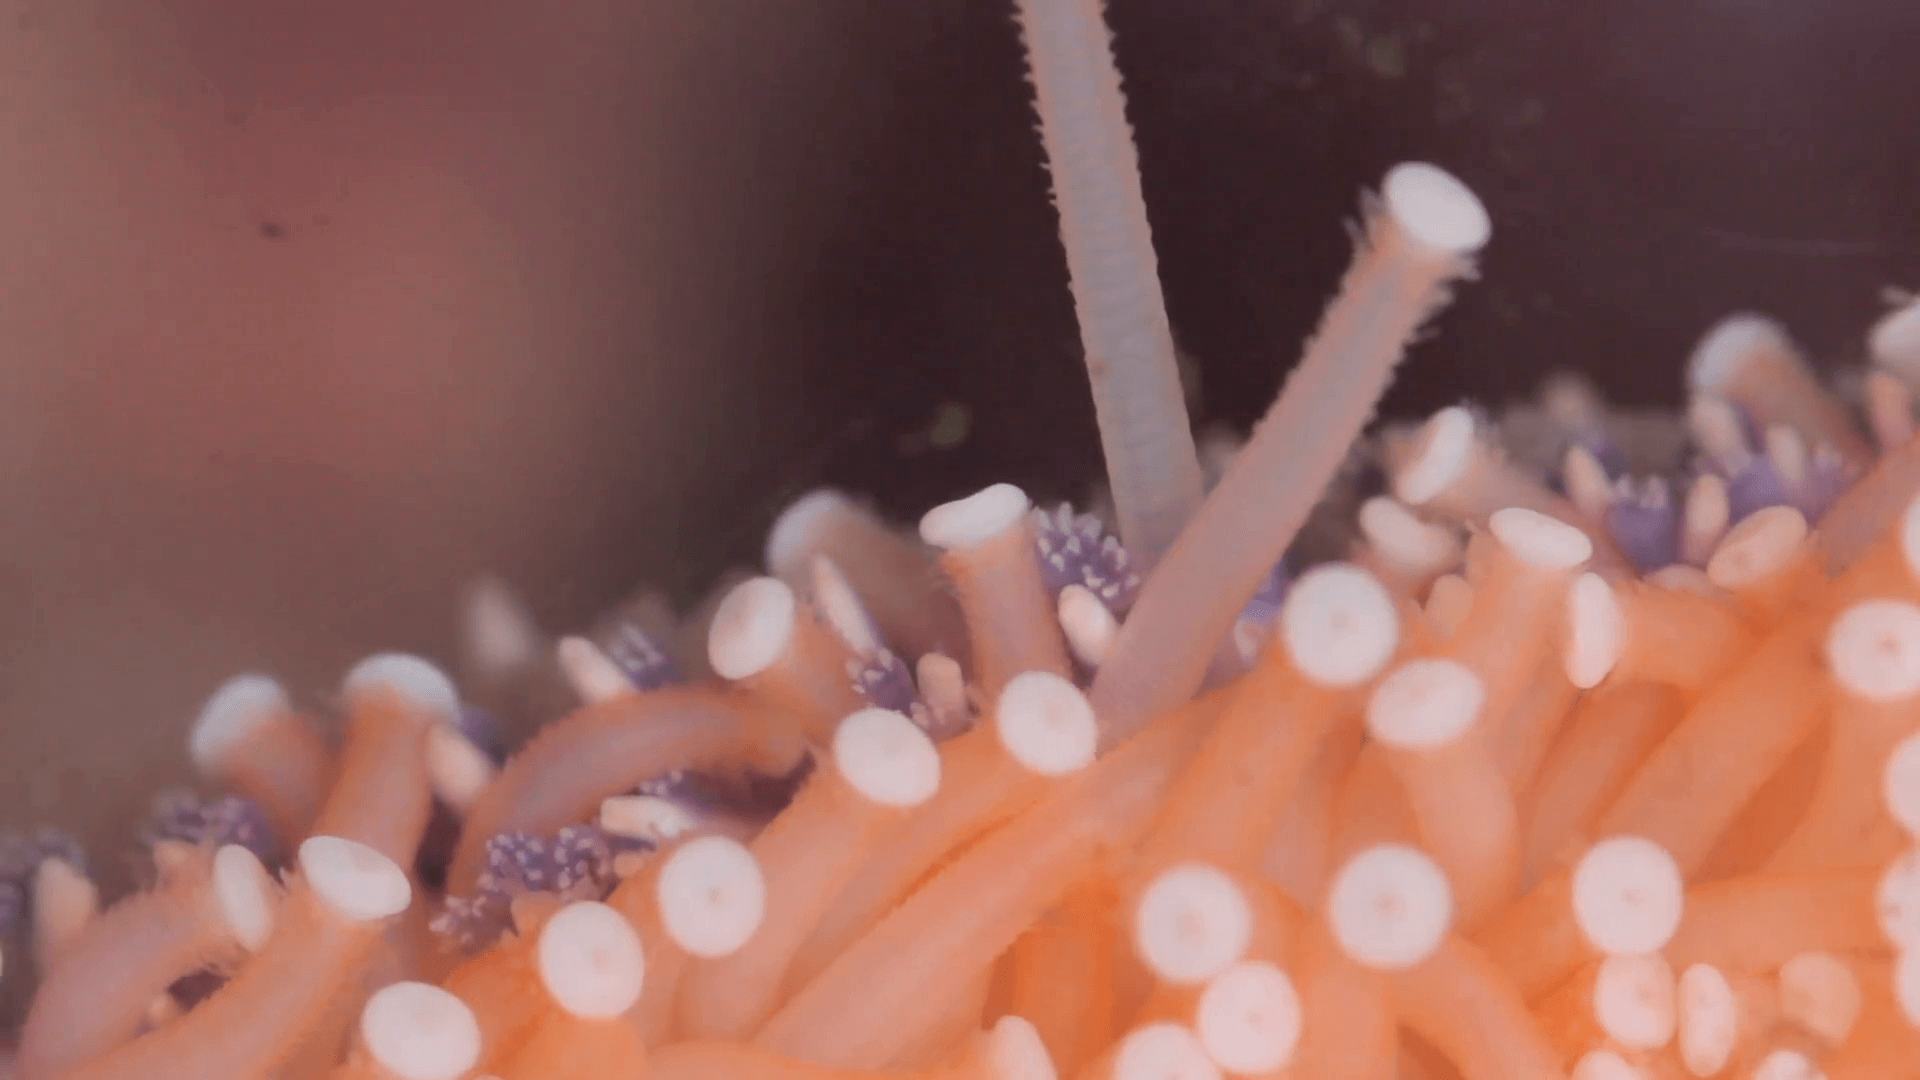 Macro view of tube feet from a live sunflower seastar starfish